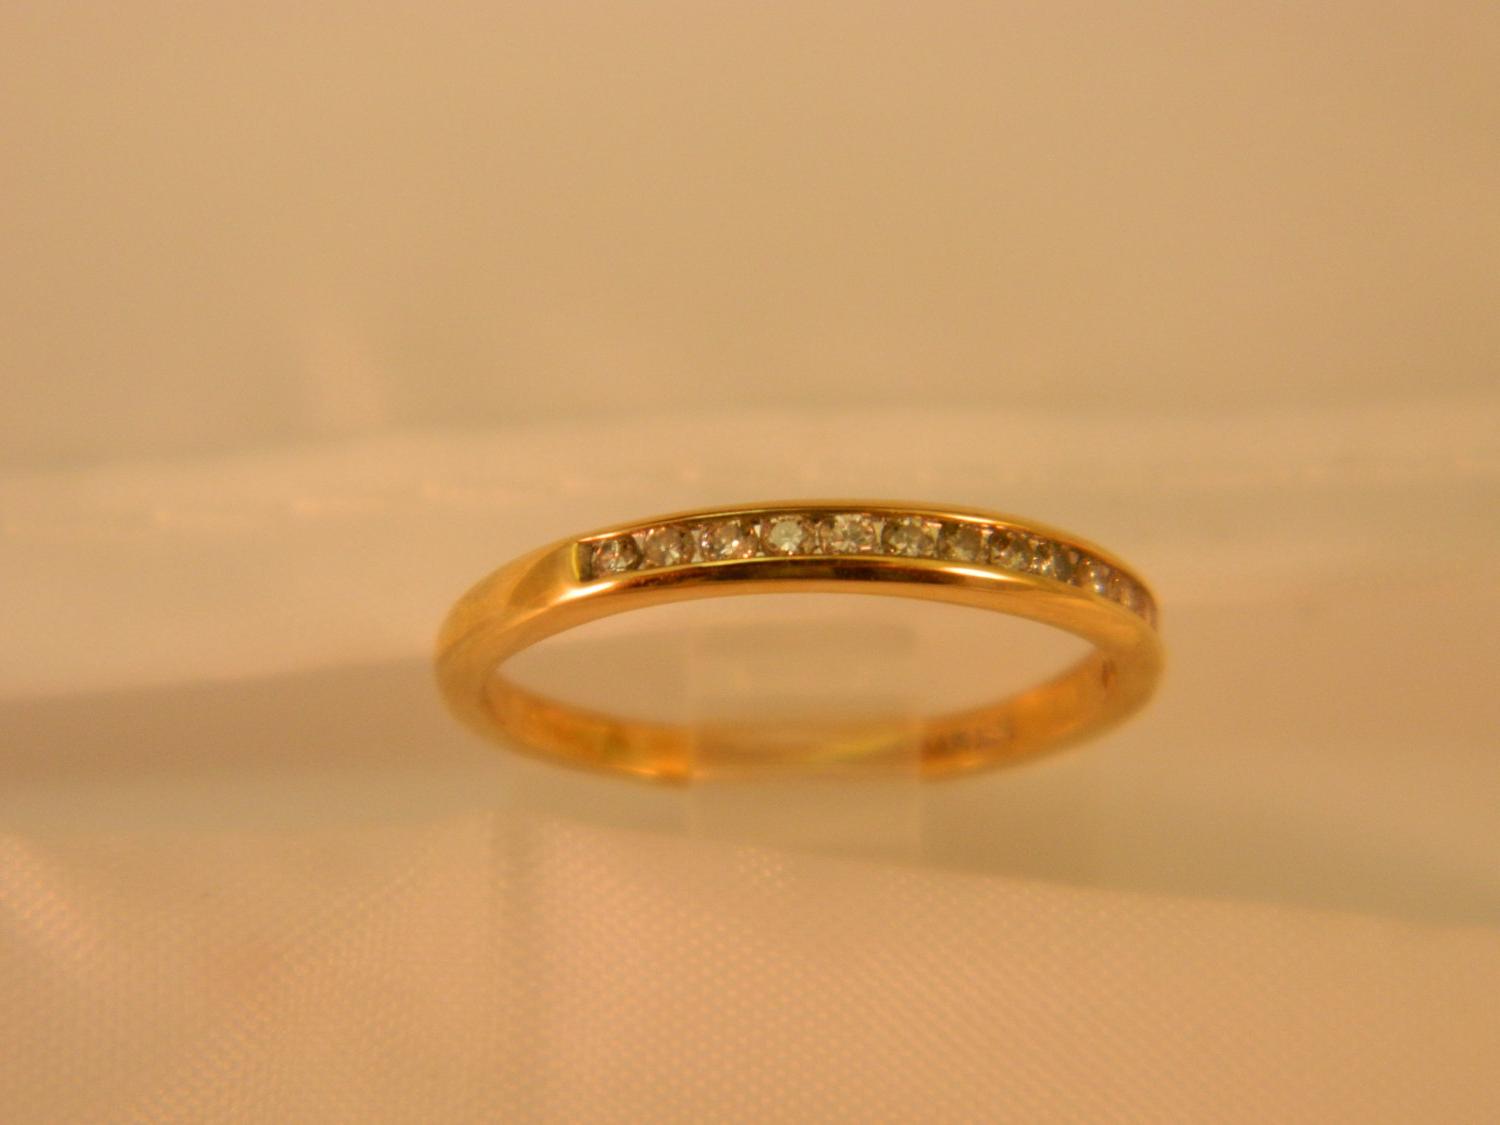 14K Yellow gold diamond wedding band .25 carat. From chrismclaughlin1